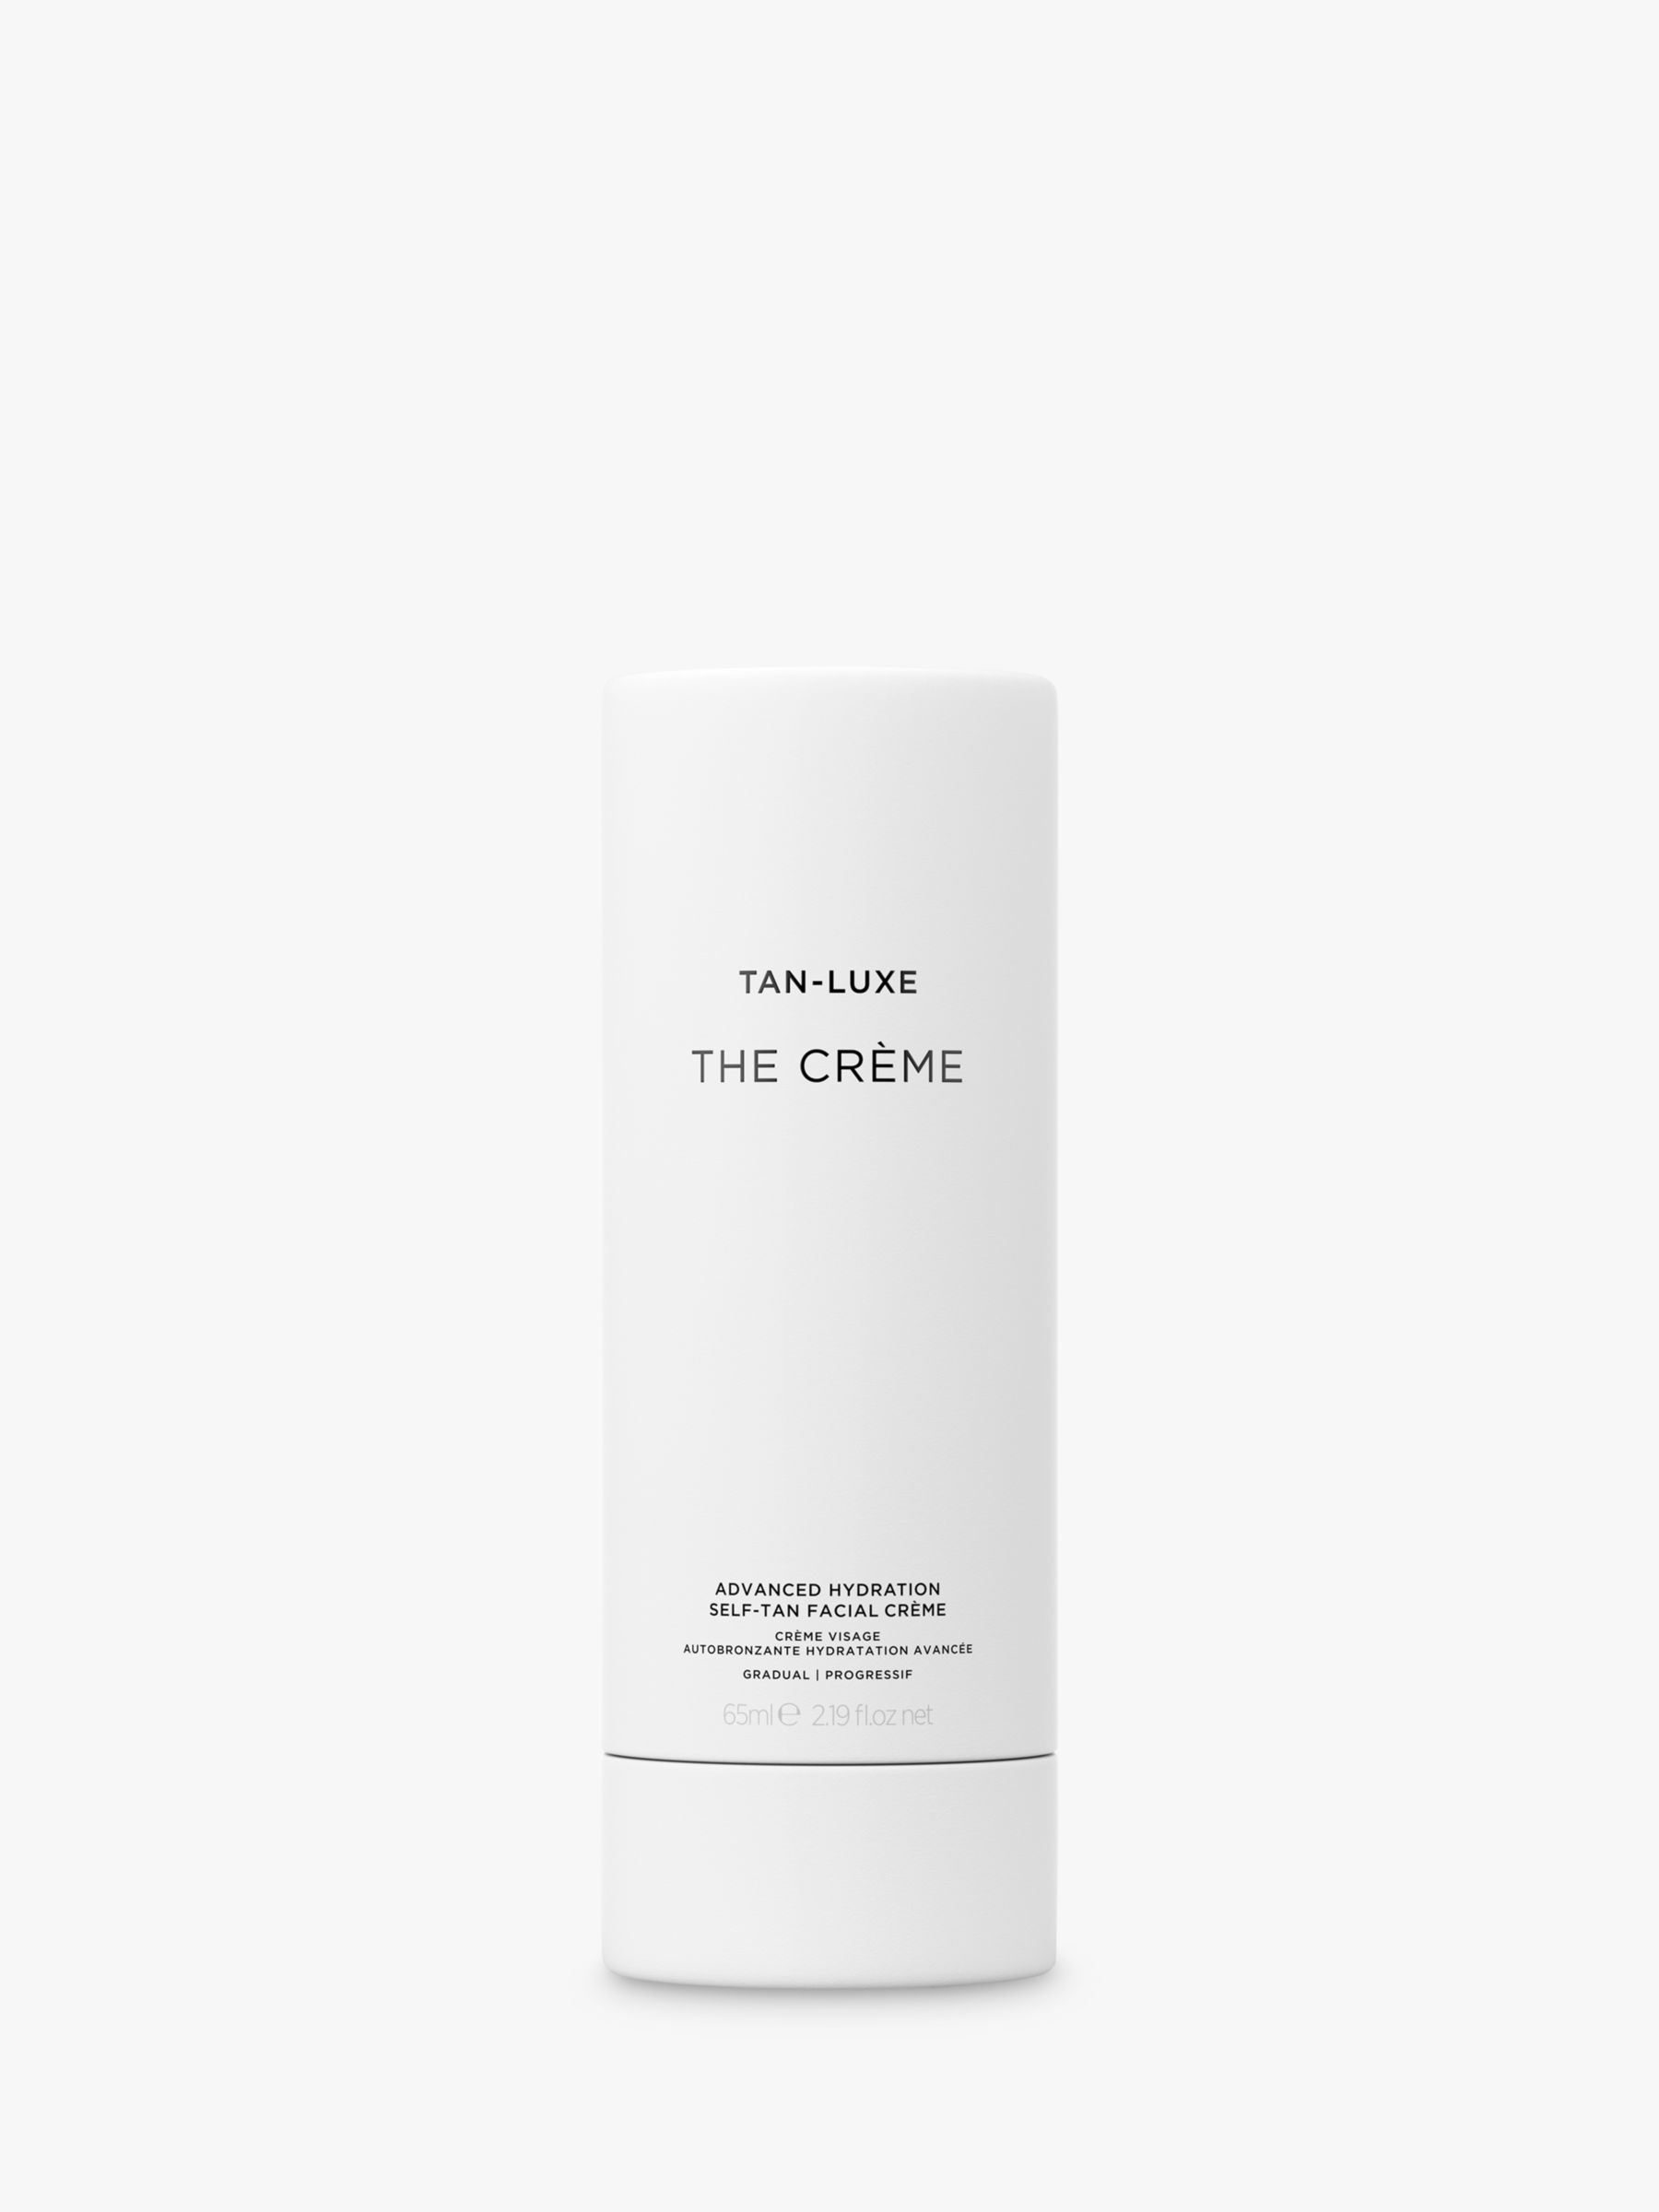 Tan-Luxe The Crème Advanced Hydration Self-Tan Facial Crème, Gradual, 65ml